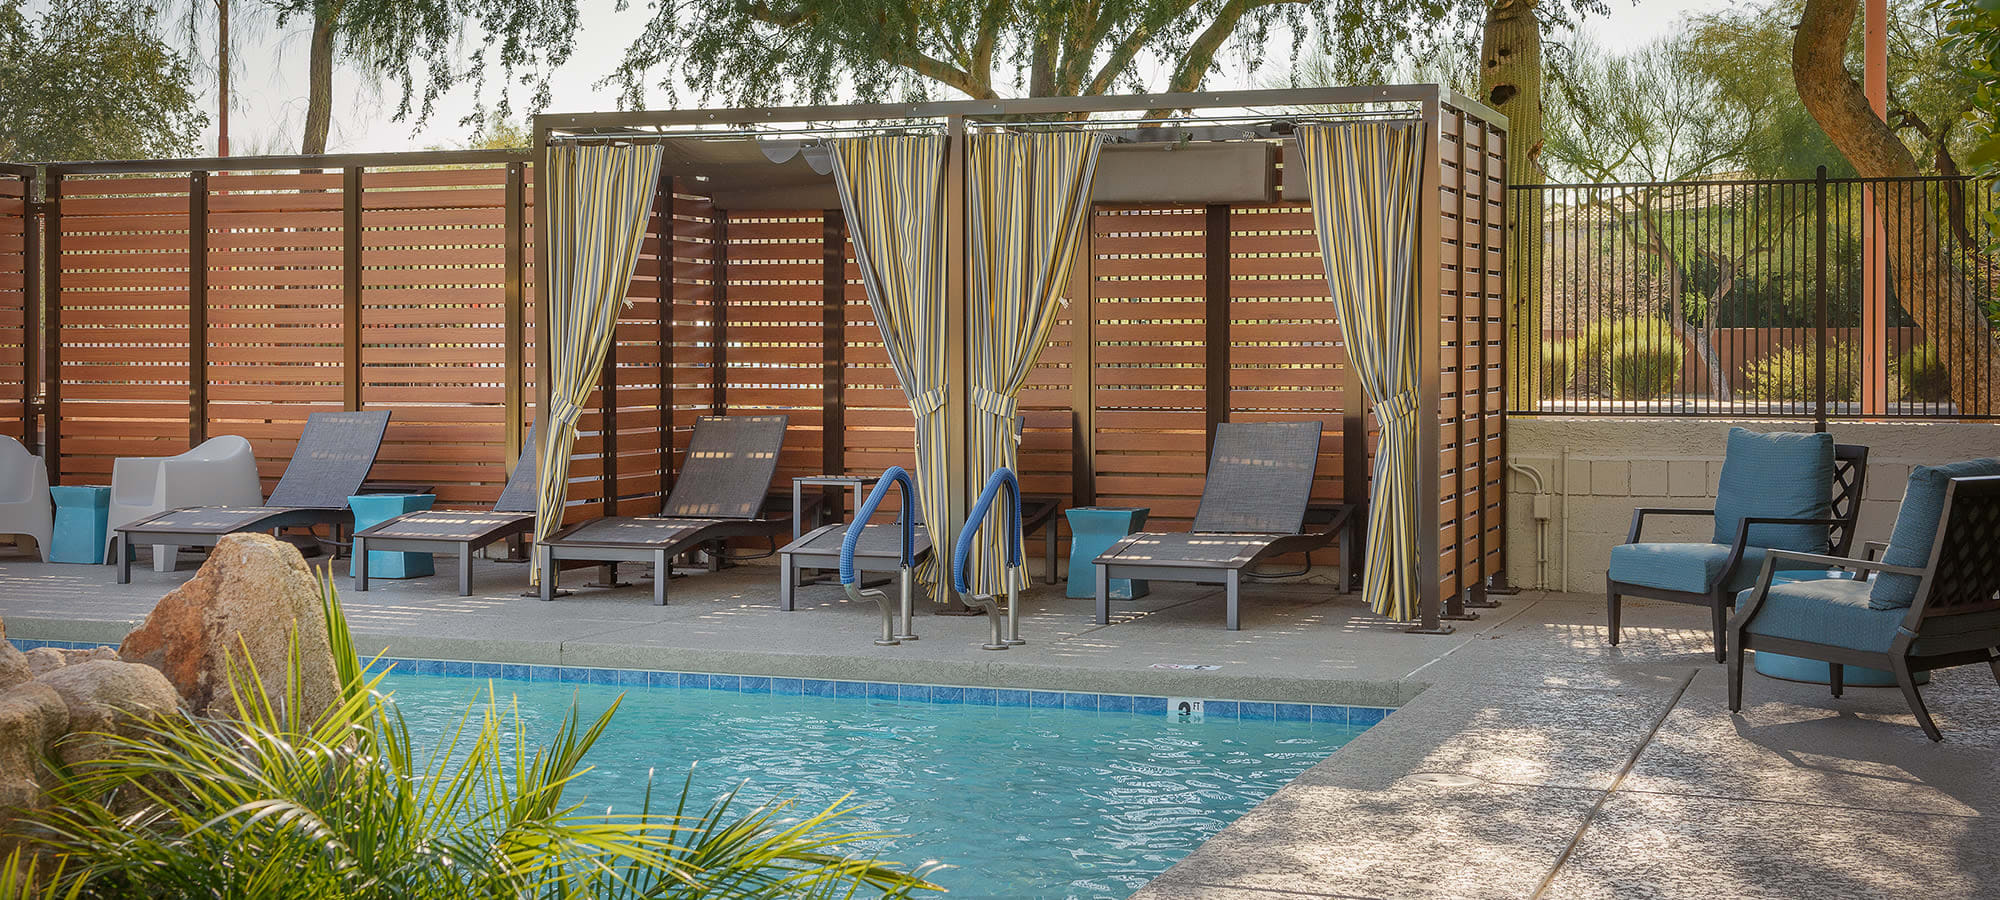 Poolside cabanas at The Regents at Scottsdale in Scottsdale, Arizona